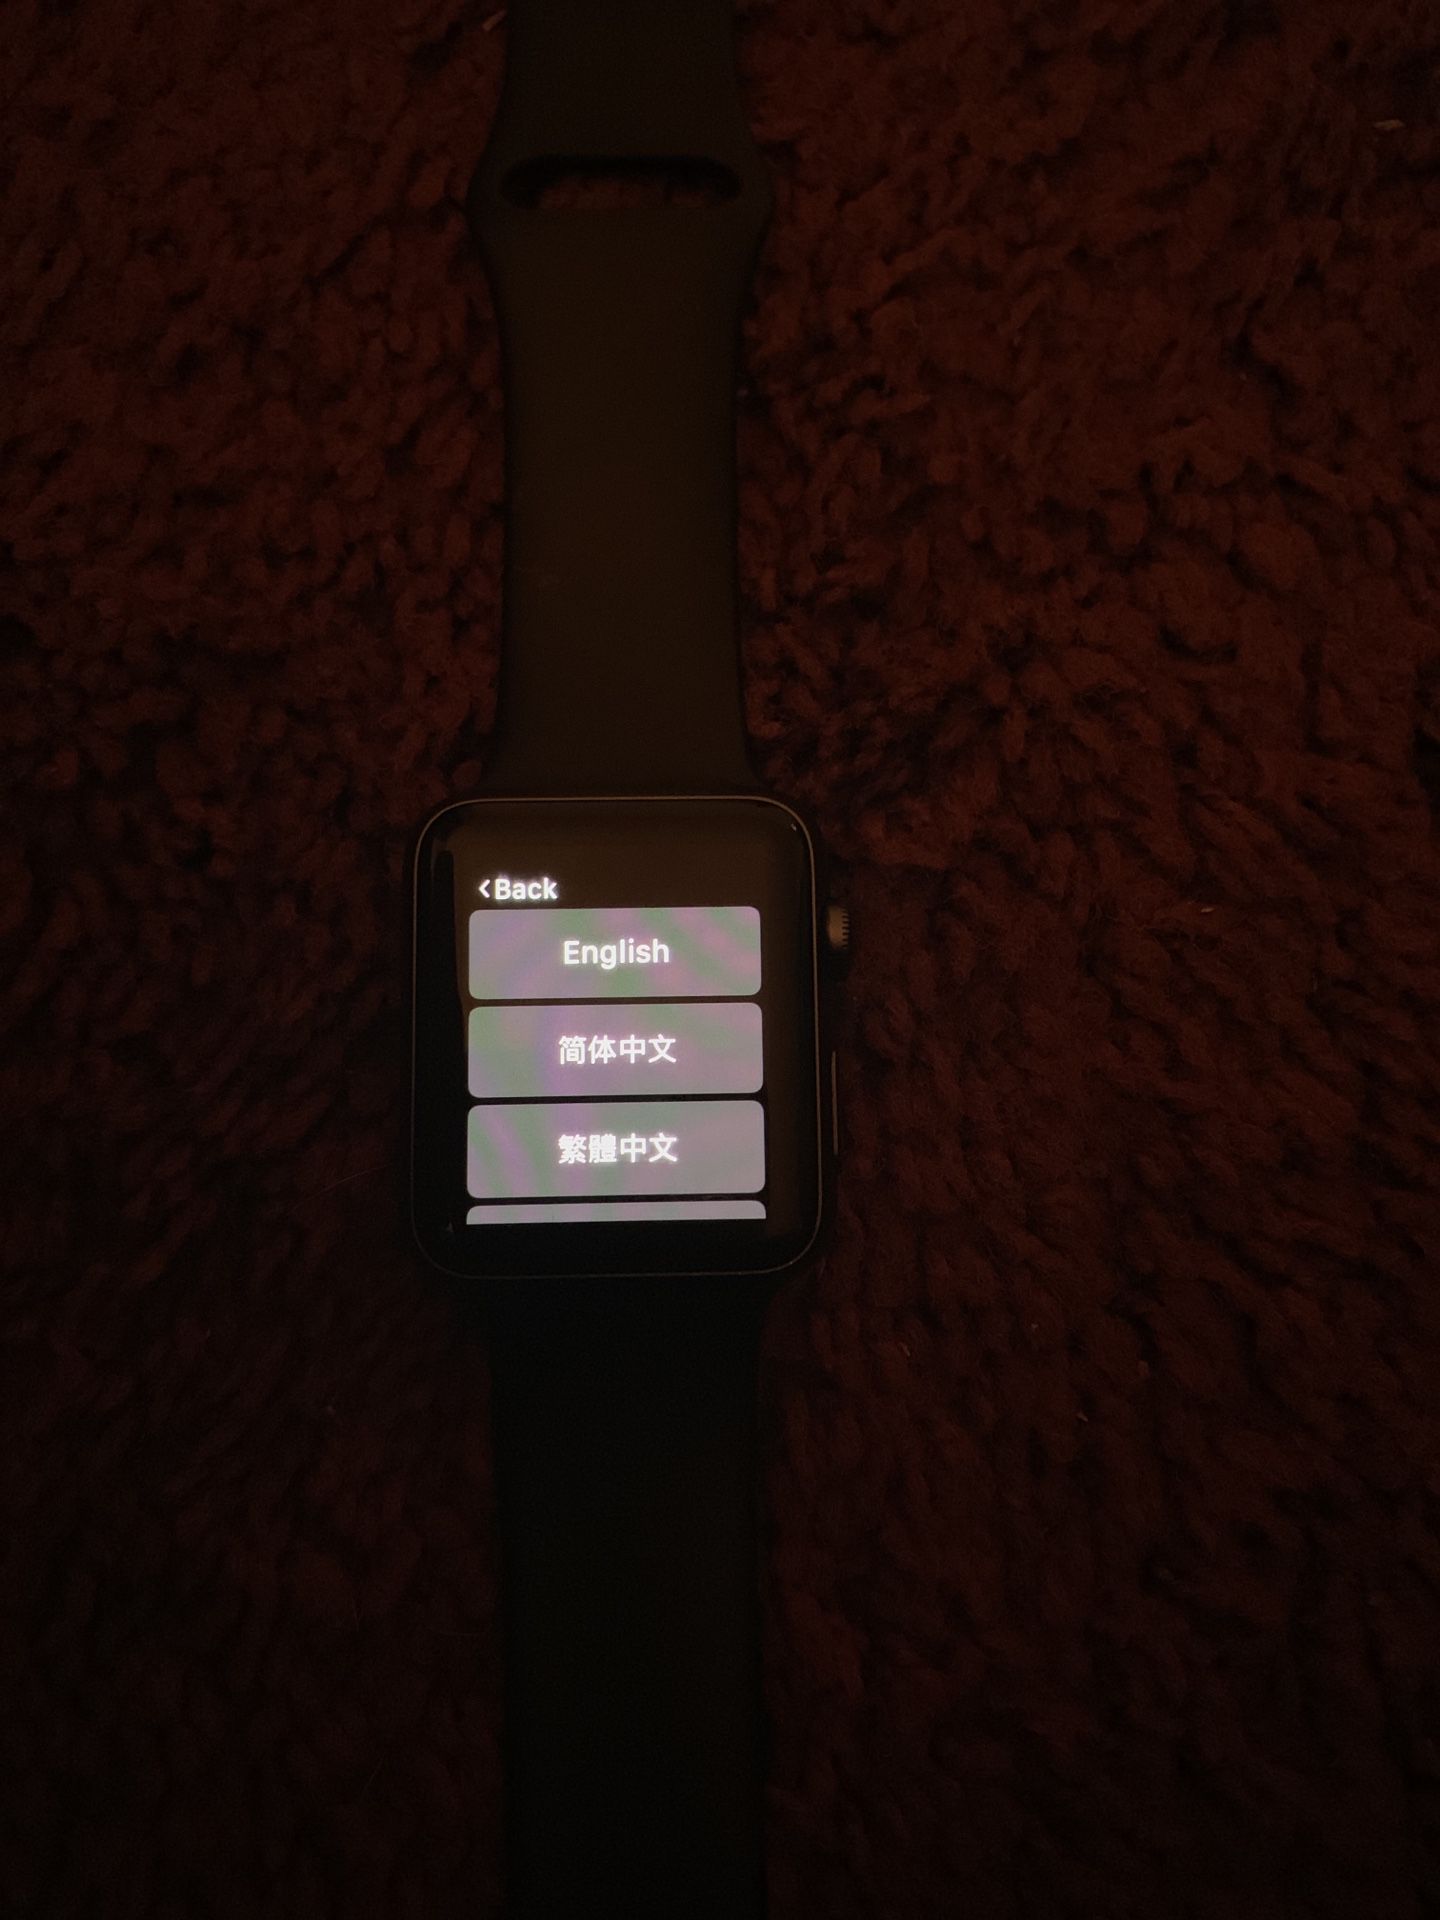 Apple Watch series 1 unlocked